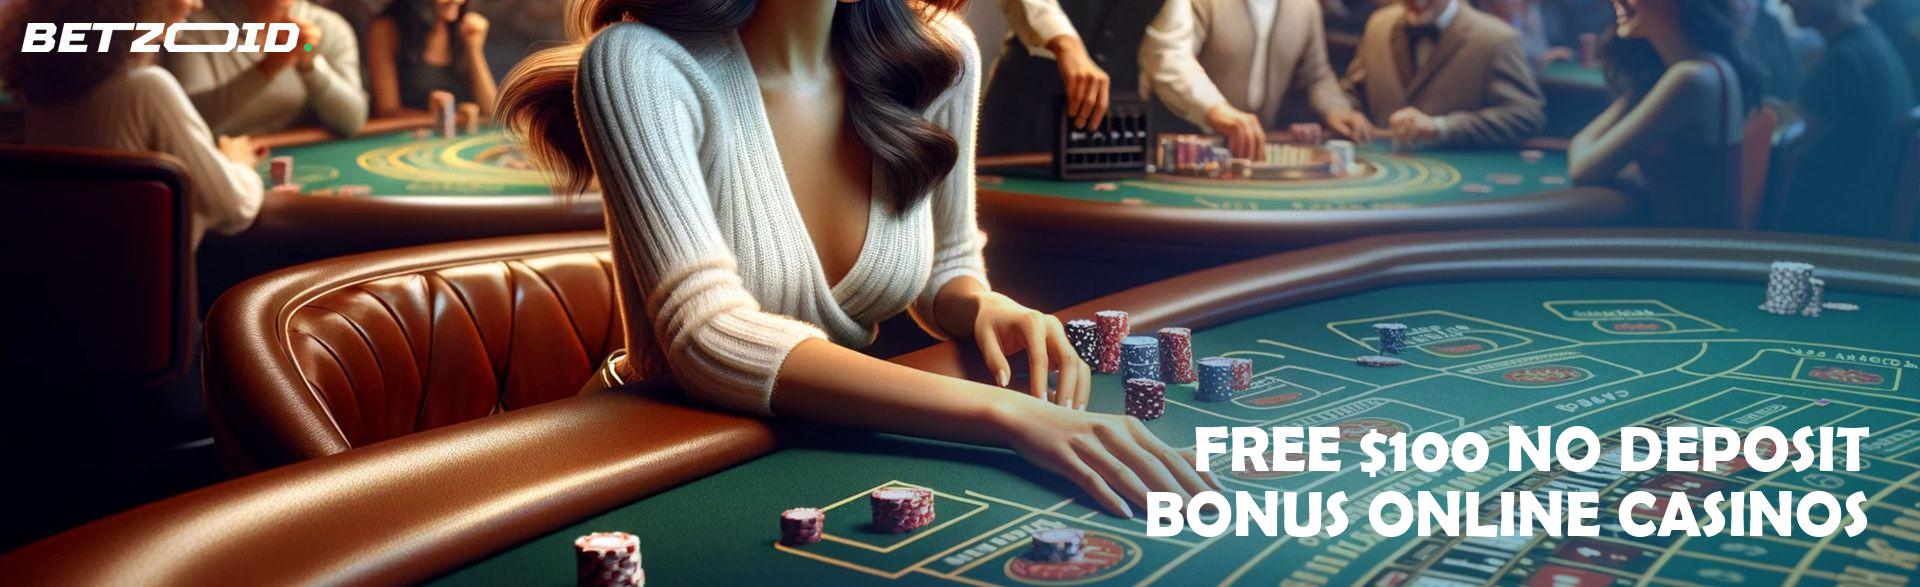 Free $100 No Deposit Bonus Online Casinos.